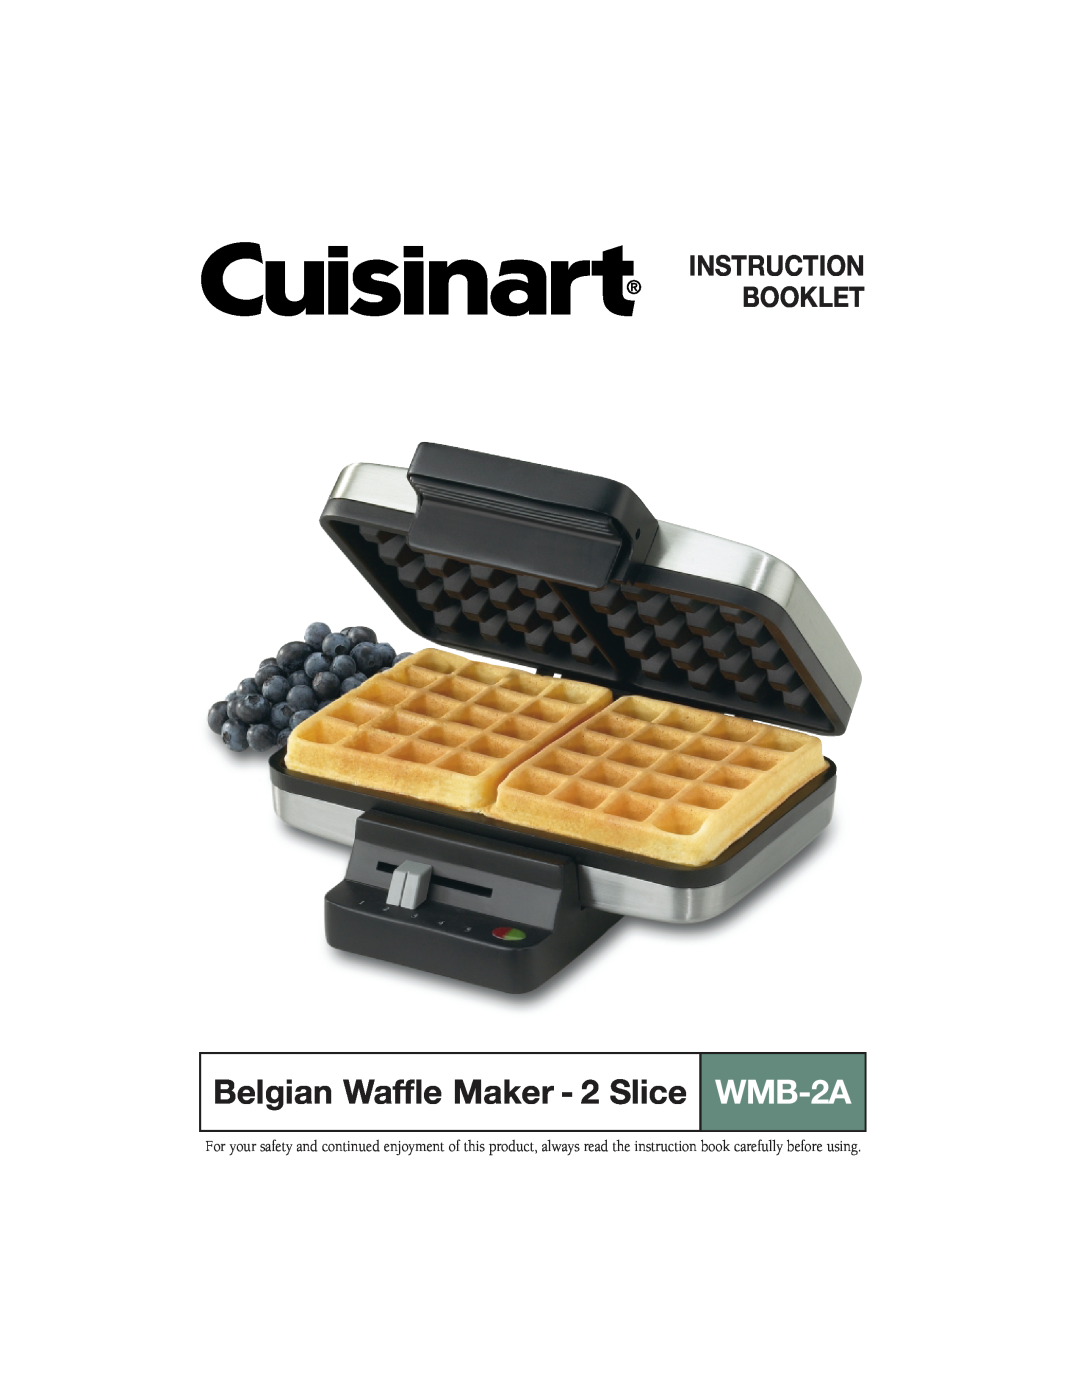 Cuisinart manual Belgian Waffle Maker - 2 Slice WMB-2A, Instruction Booklet 